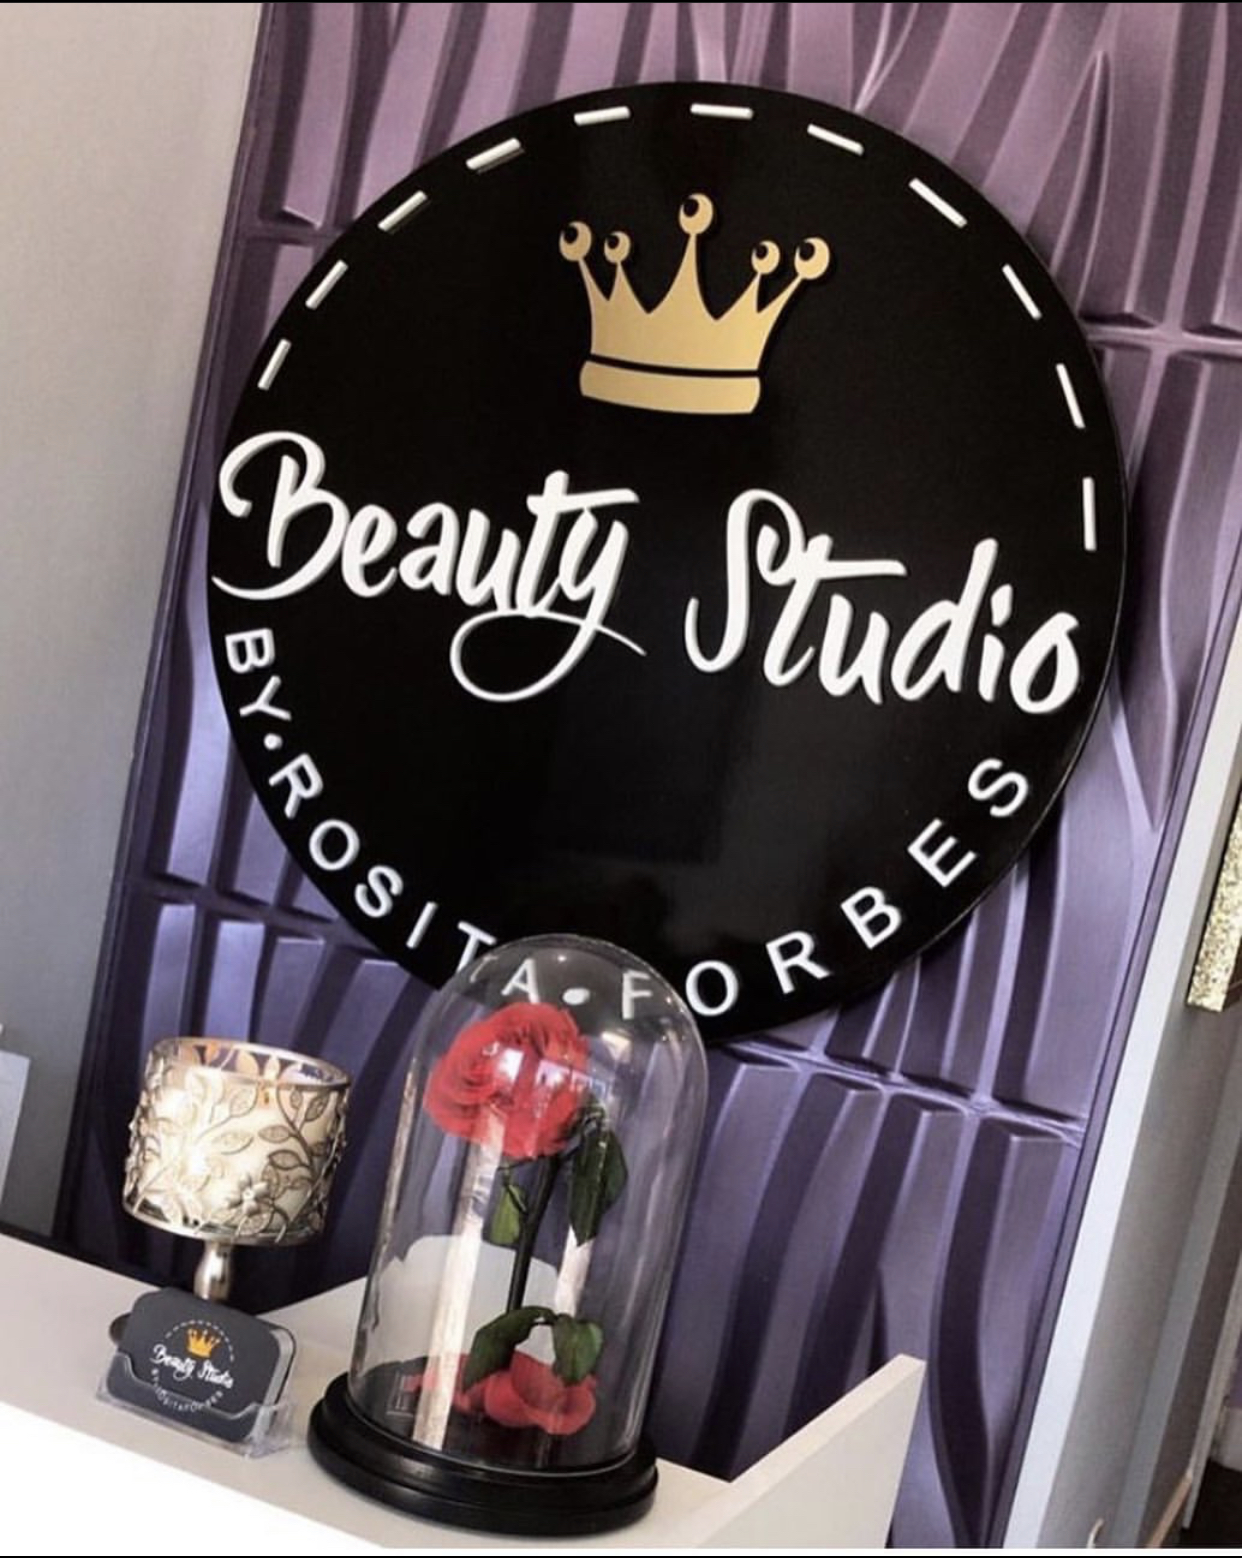 Beauty Studio by Rosita Forbes